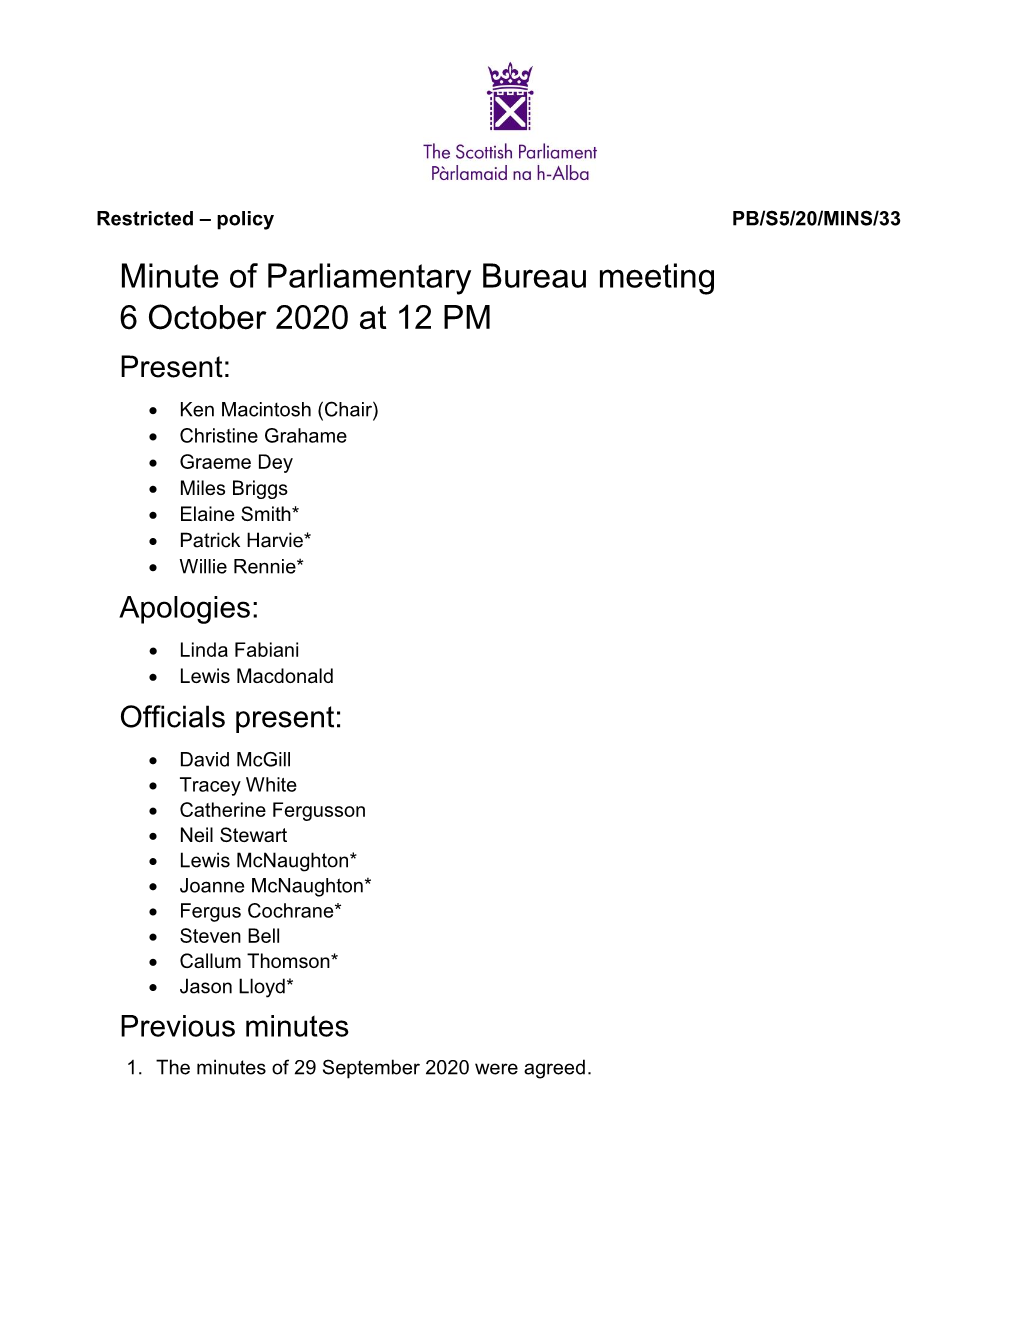 Minute of Parliamentary Bureau Meeting 6 October 2020 at 12 PM